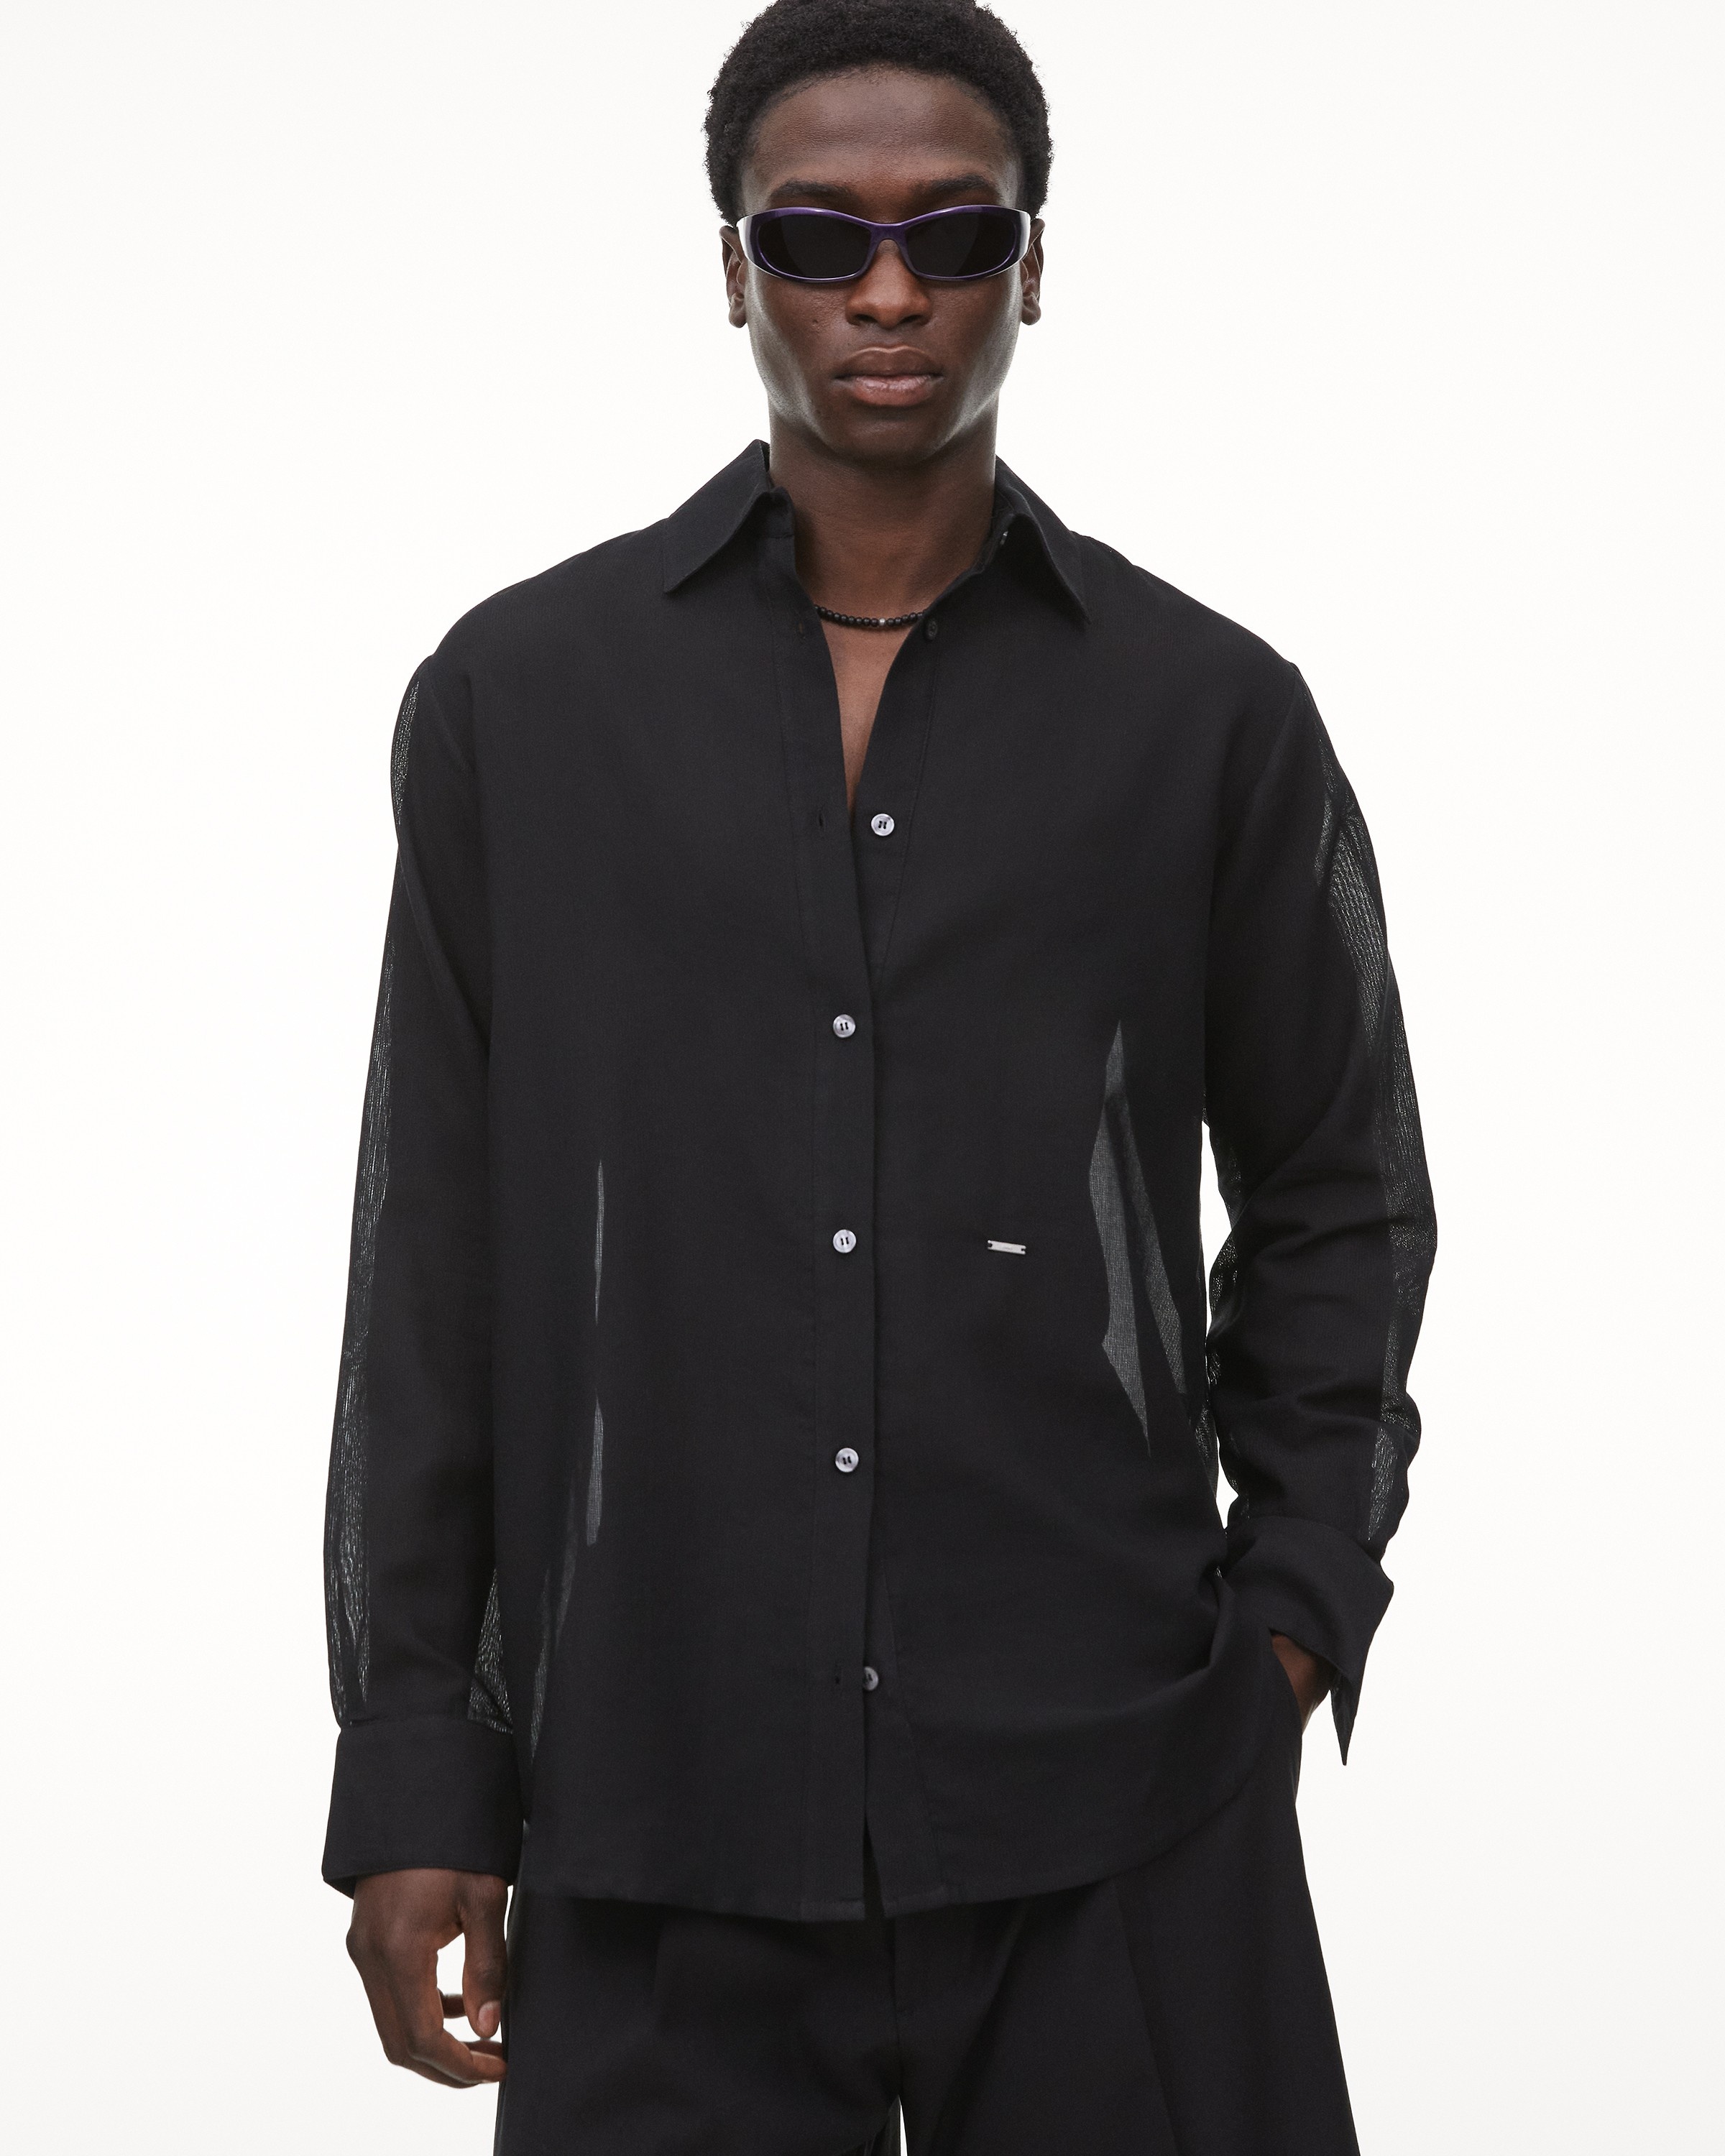 Dominica Shirt Black 5